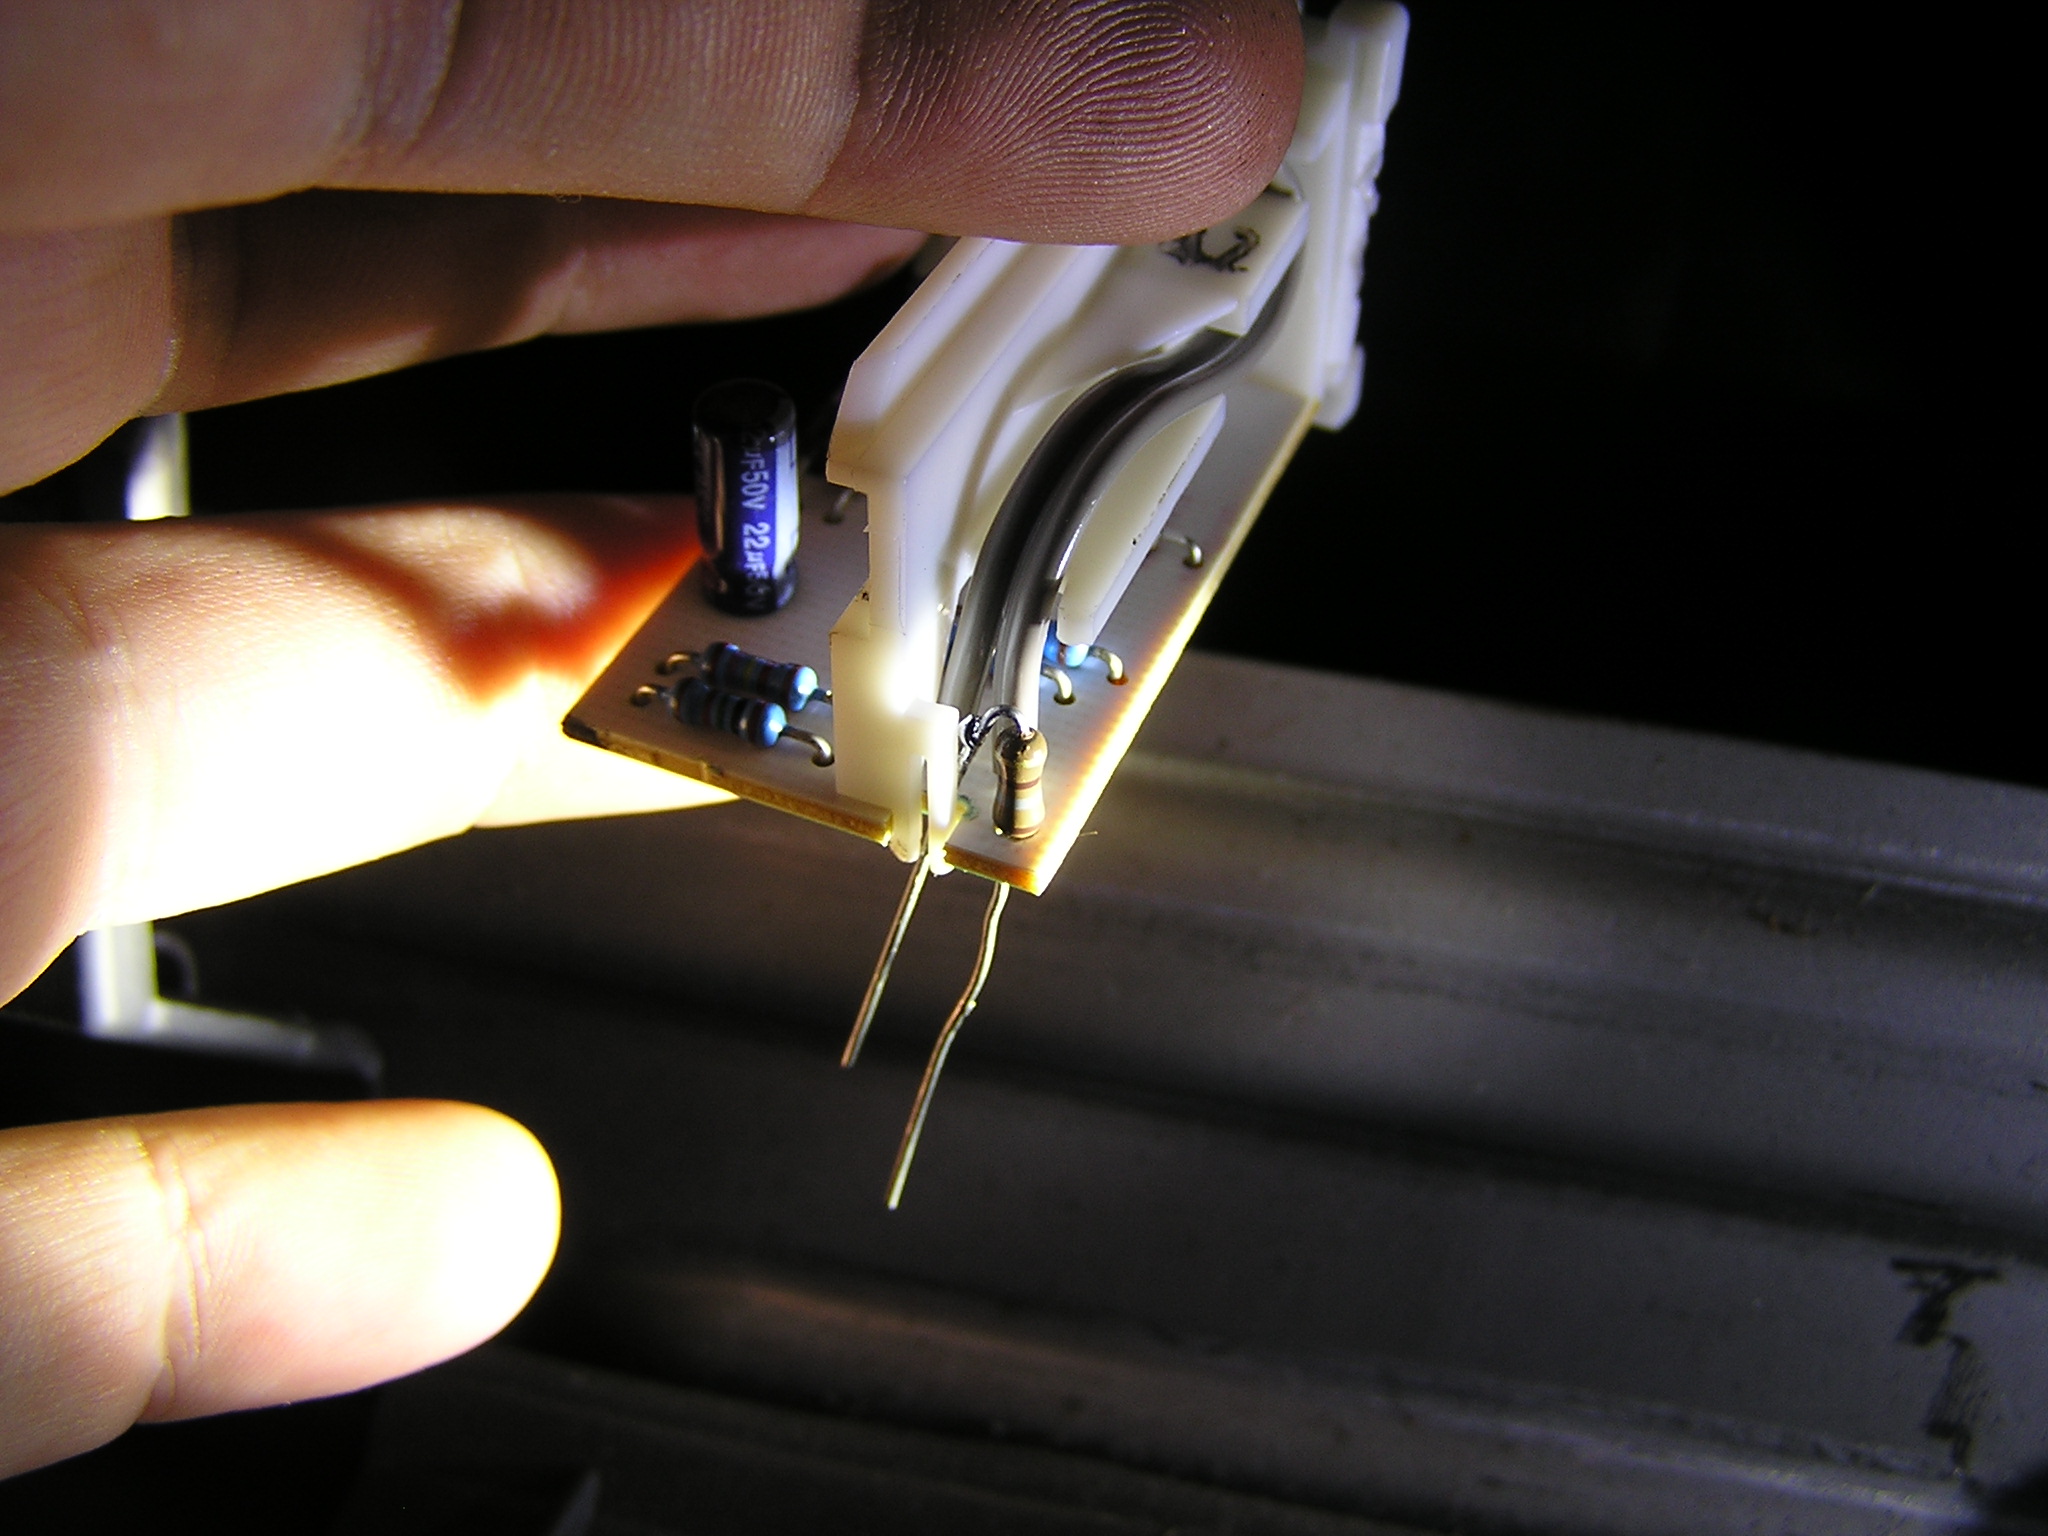 Adding the resistor